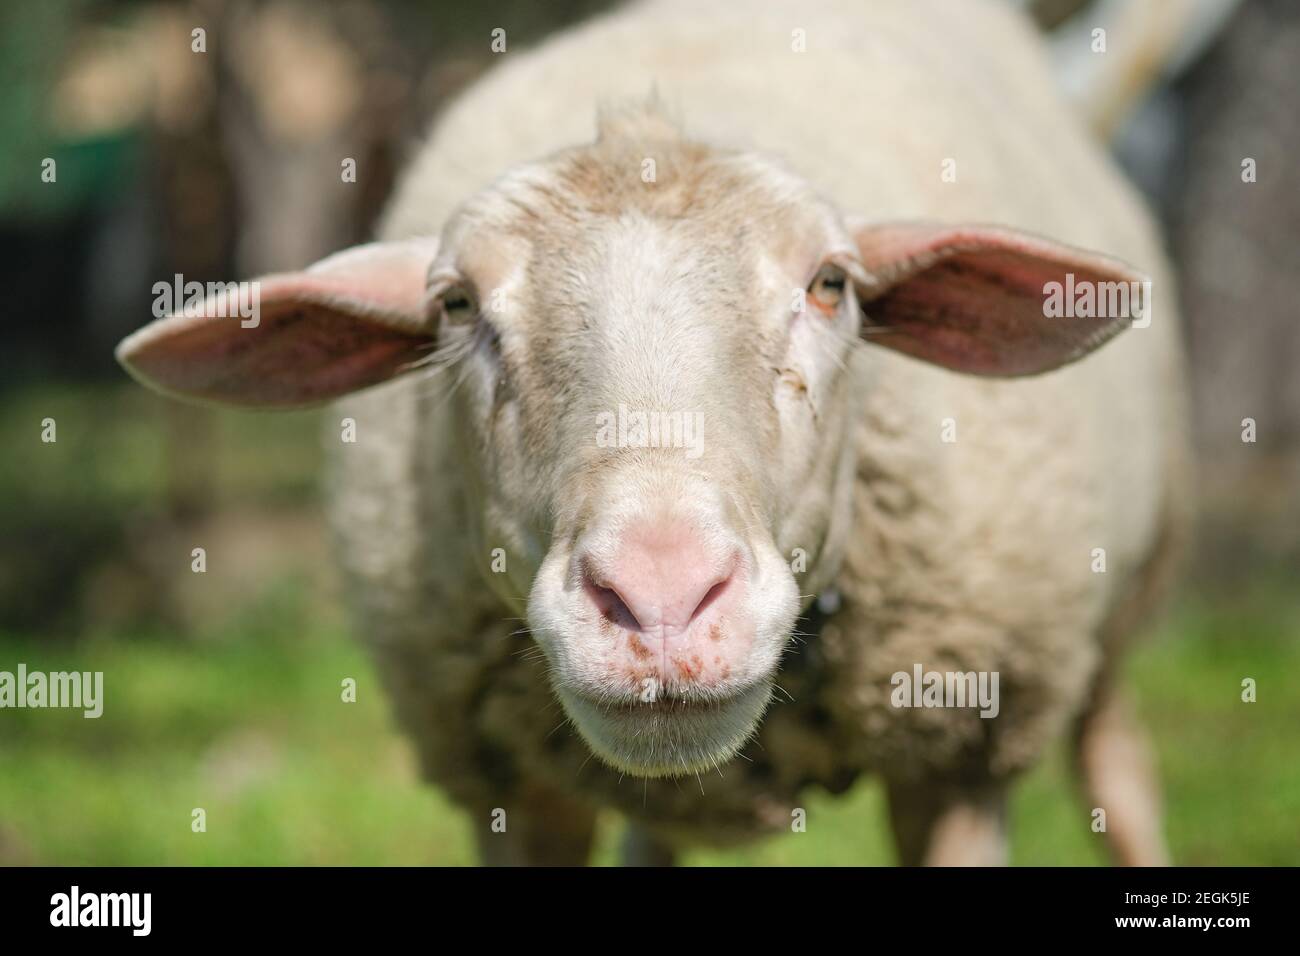 Cute adorable wool sheep face portrait close up,ovine animals breeding Stock Photo